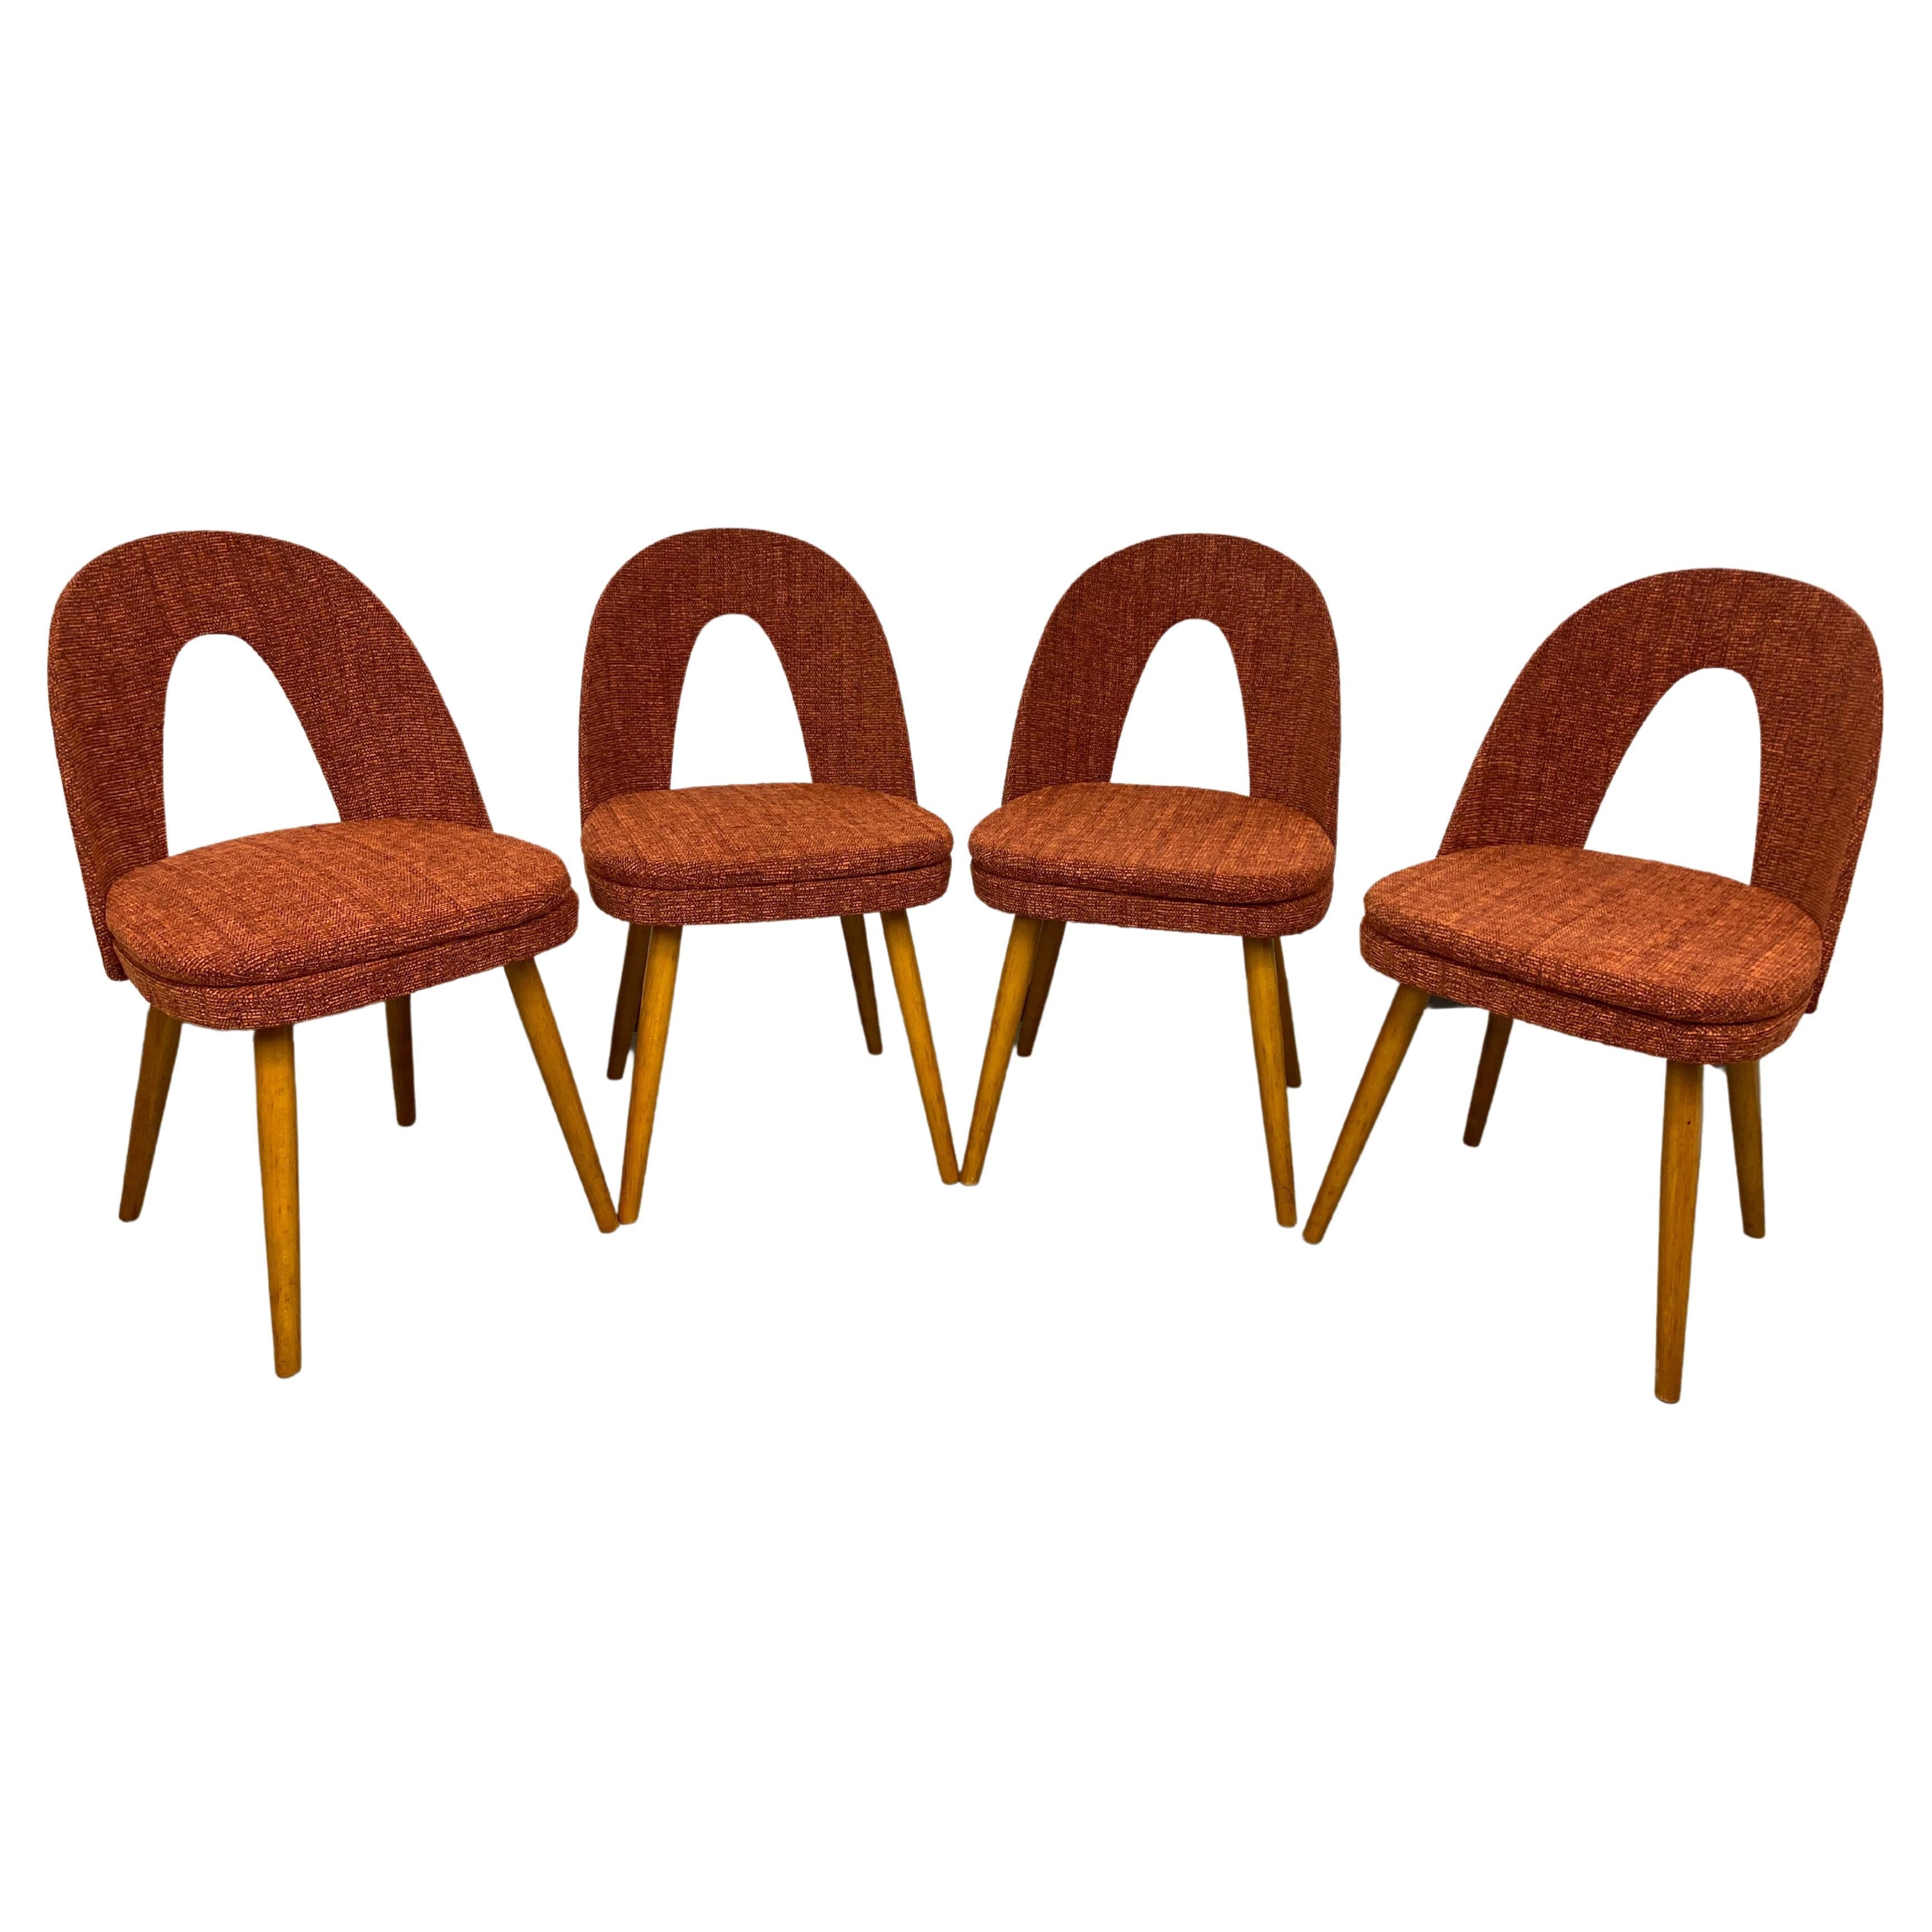 Mid-Centruy Design Dining Chairs by Antonín Šuman for Mier Topoľčany